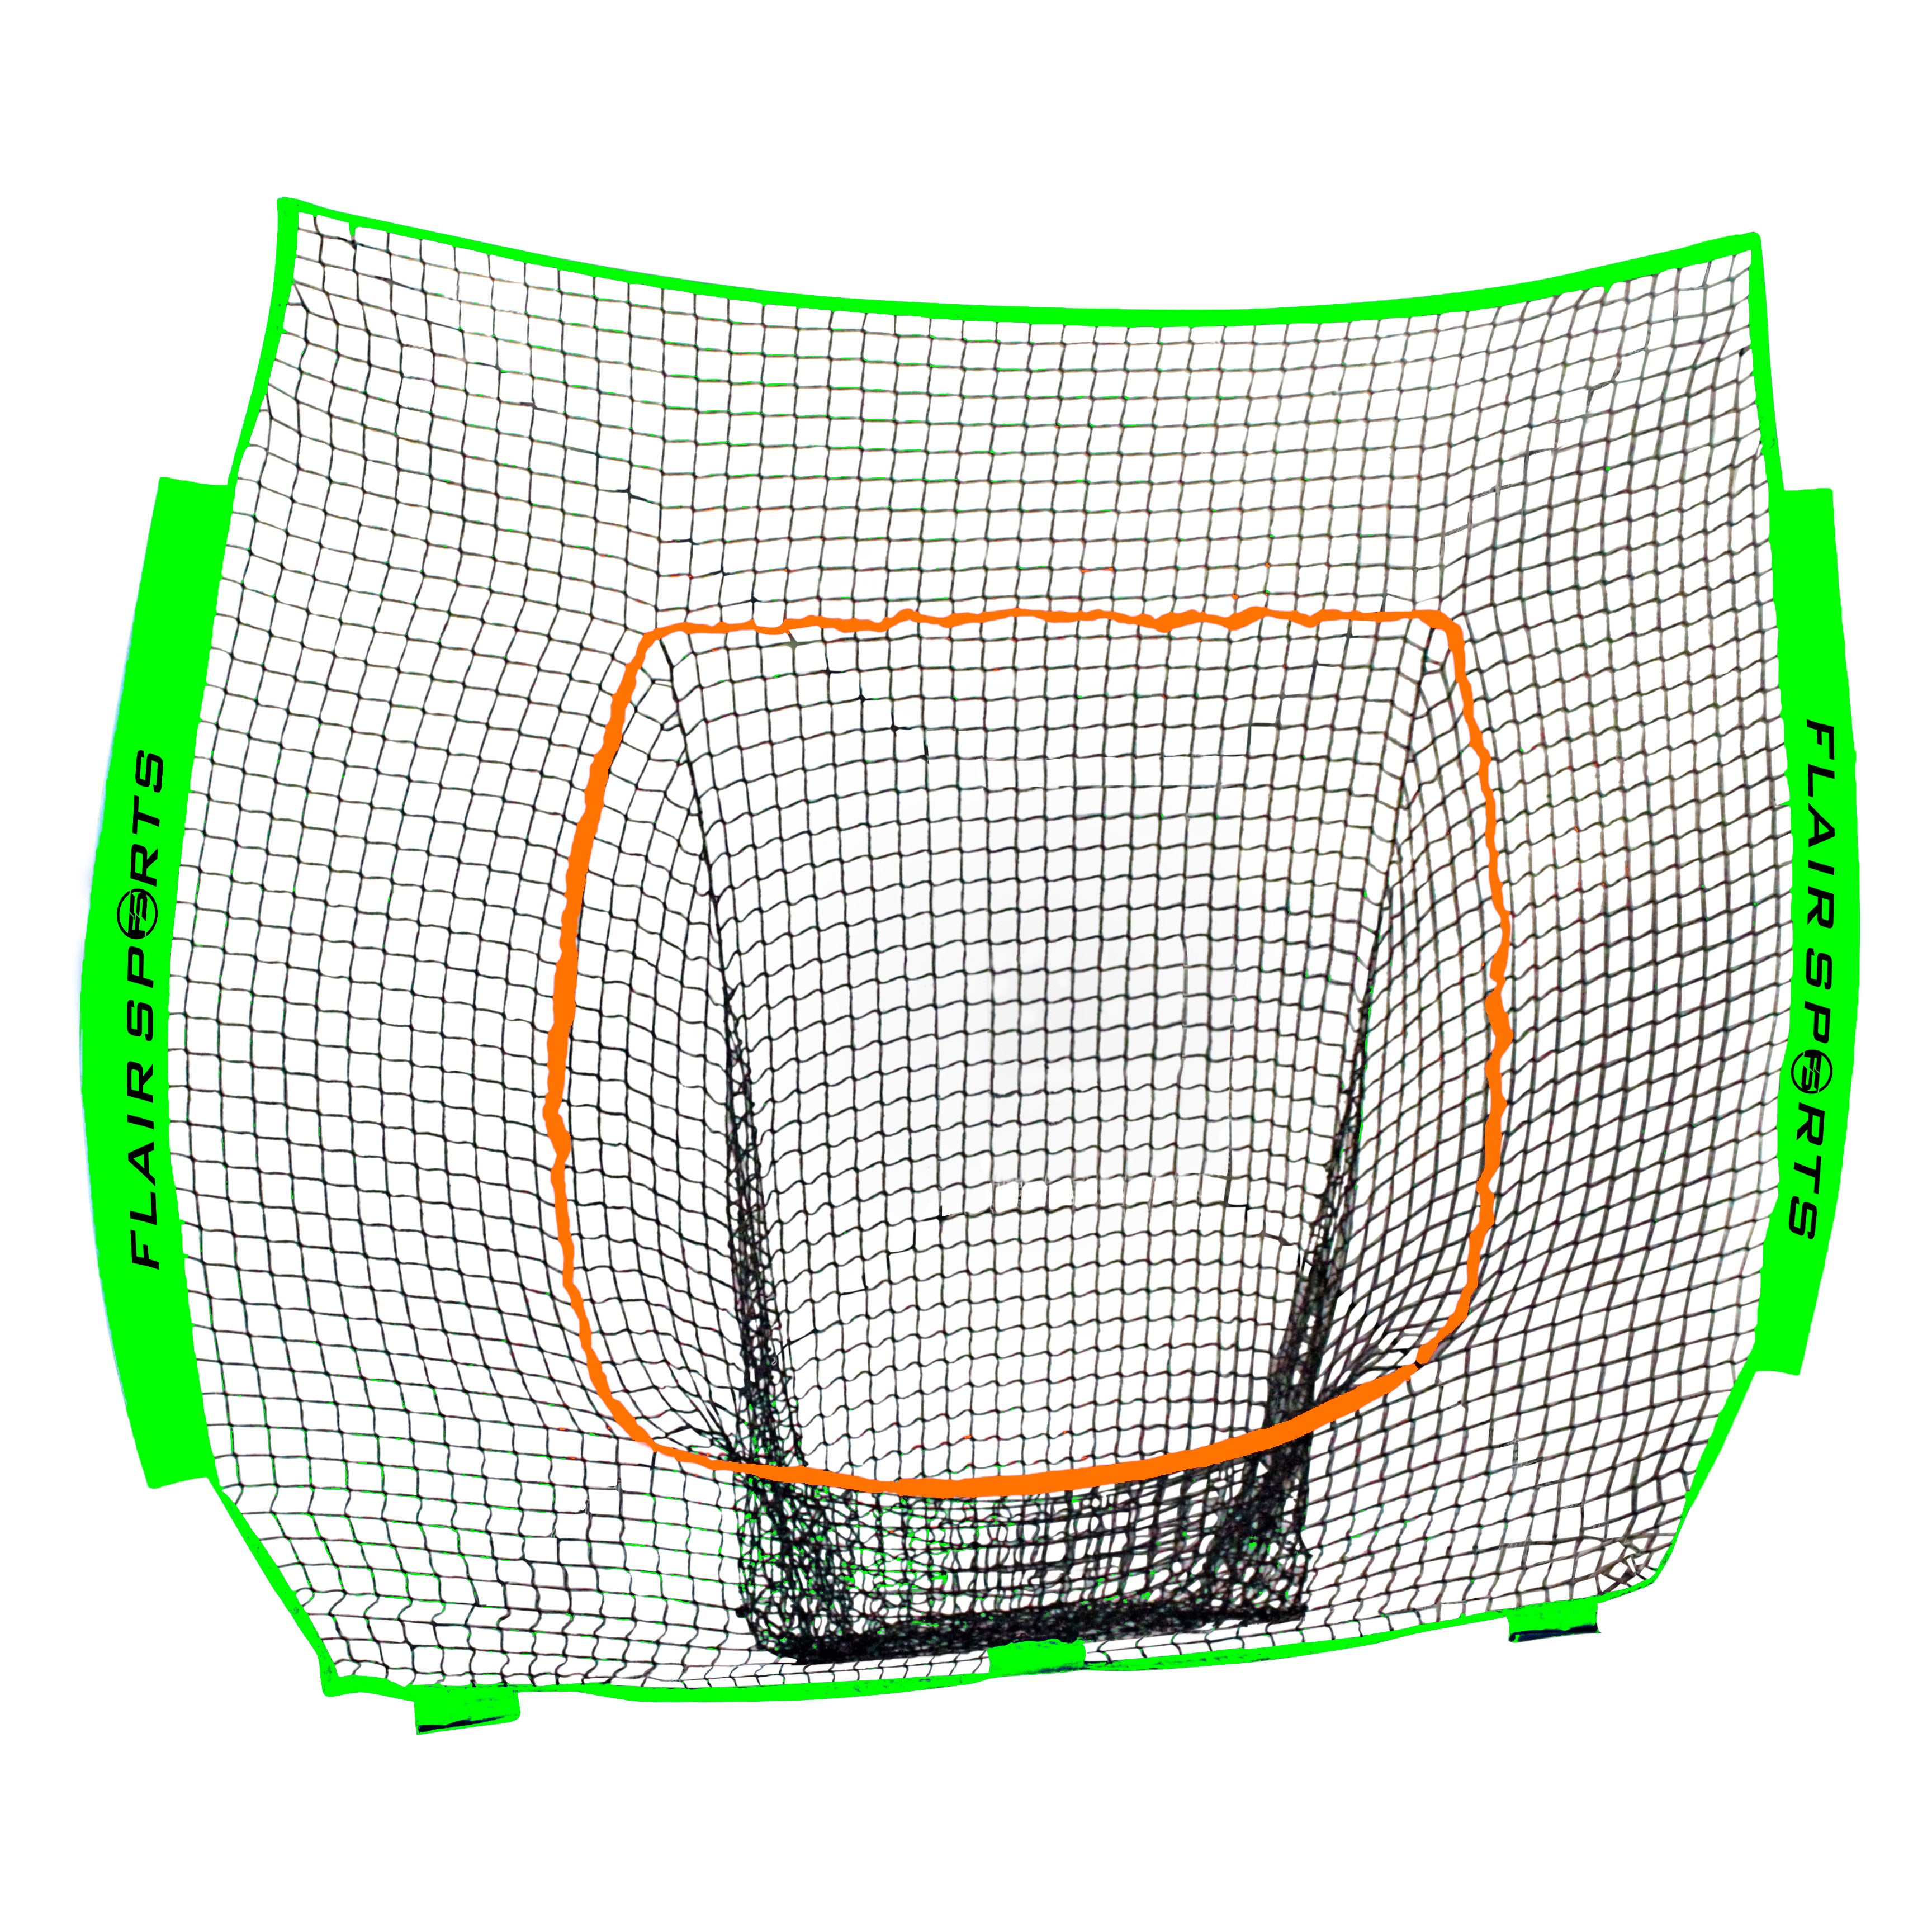 (Net Replacement Only) Baseball / Softball Net for Hitting & Pitching 7' x 7' - NEON GREEN / NEON ORANGE